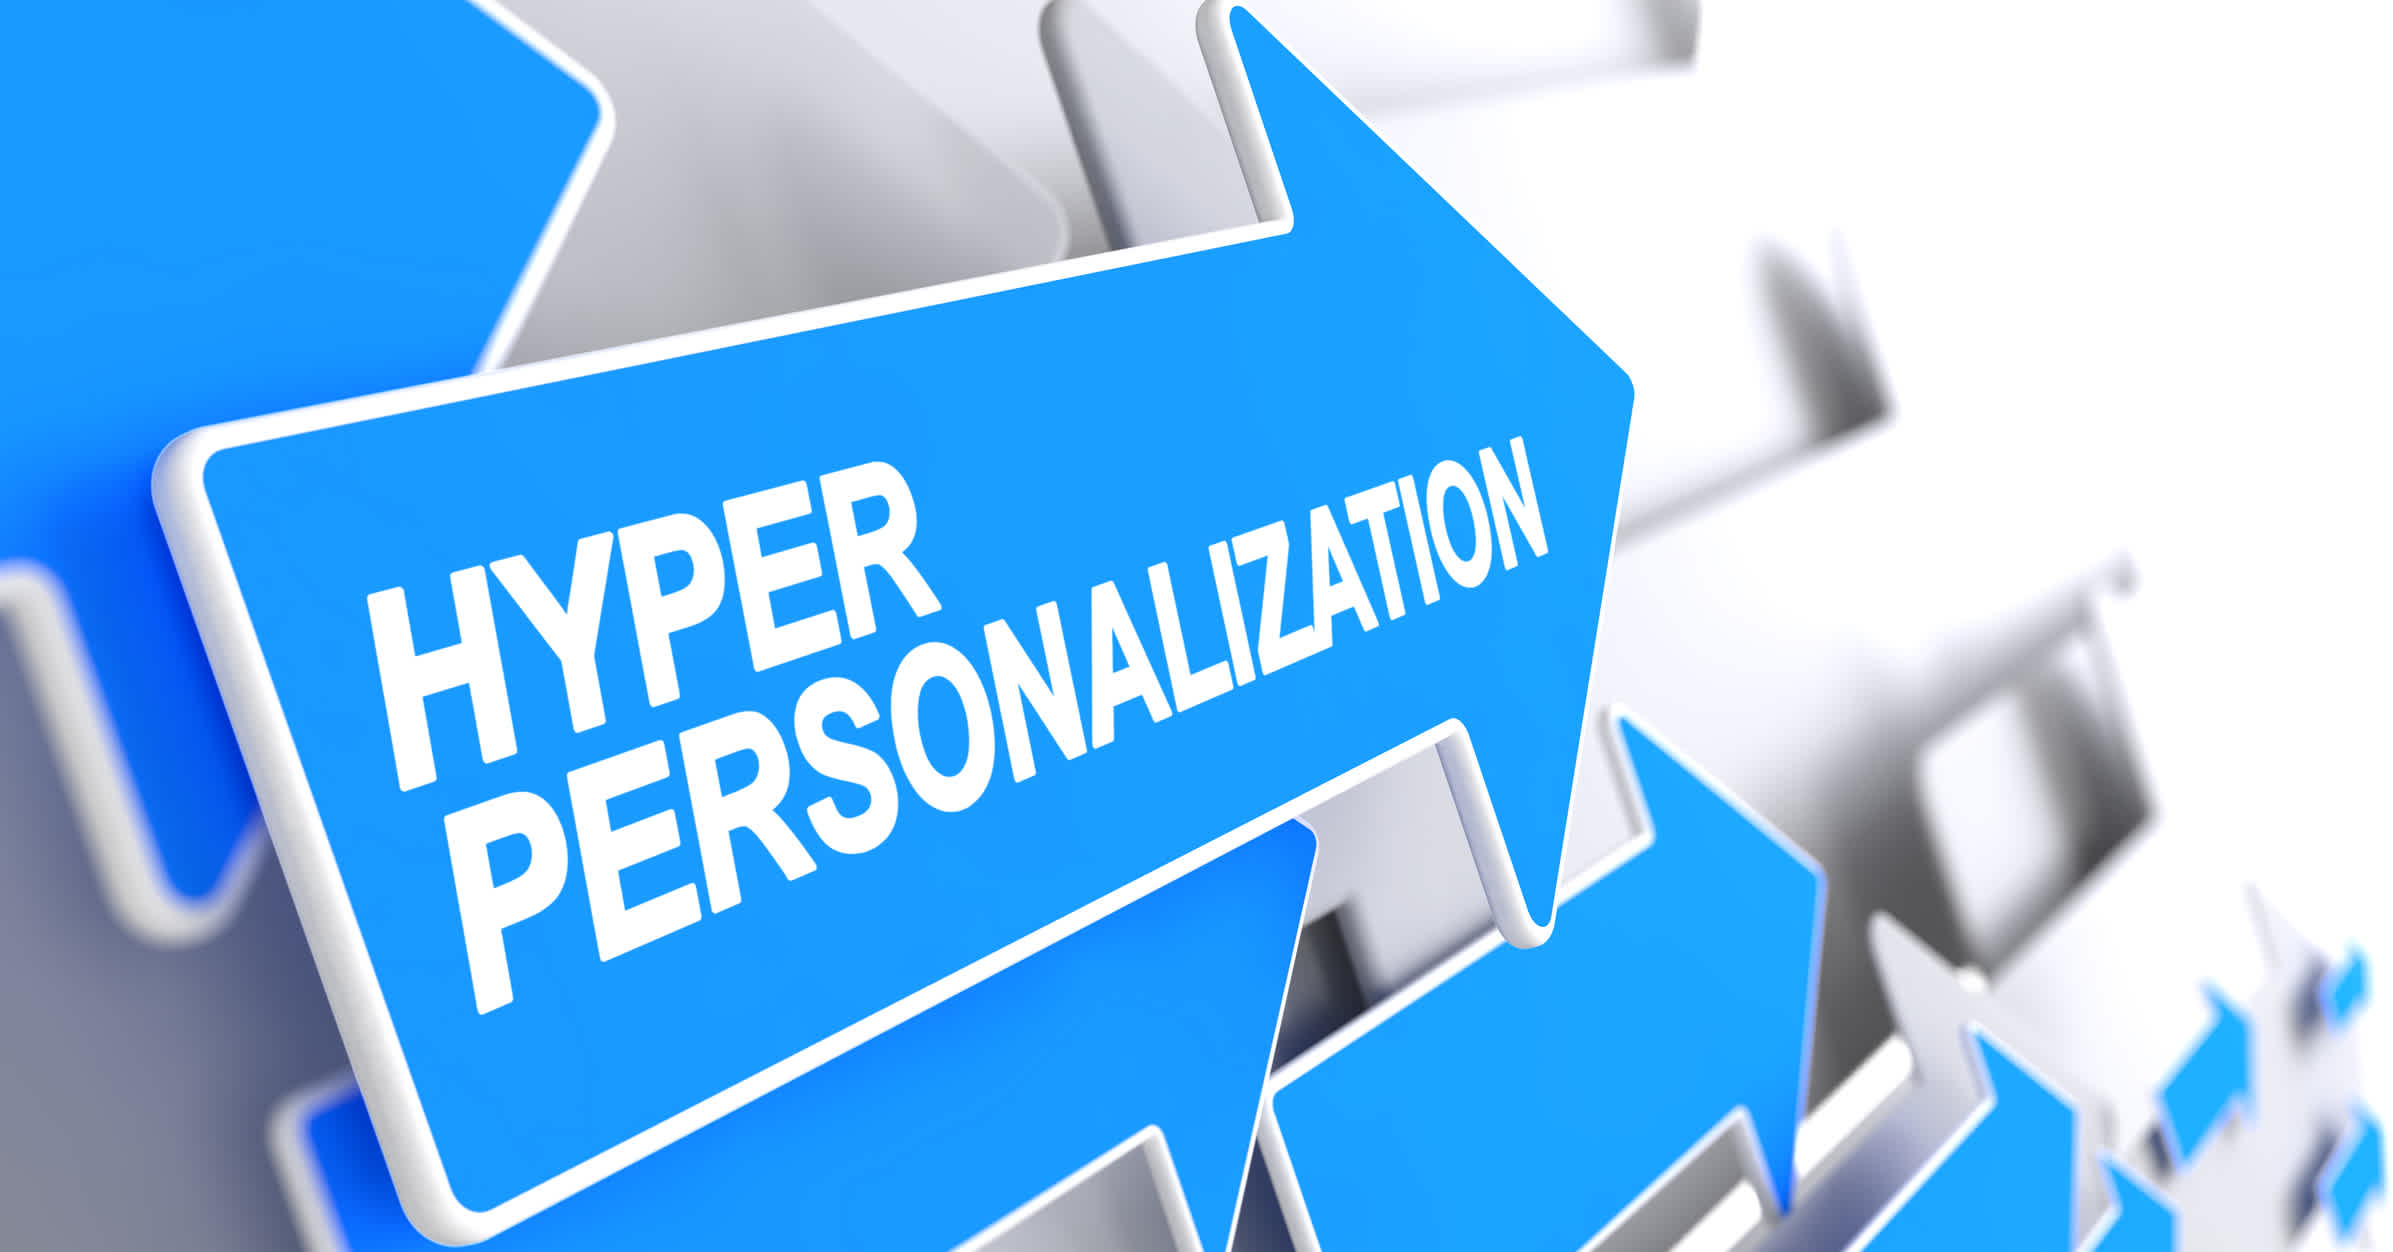 hyper personalization in marketing